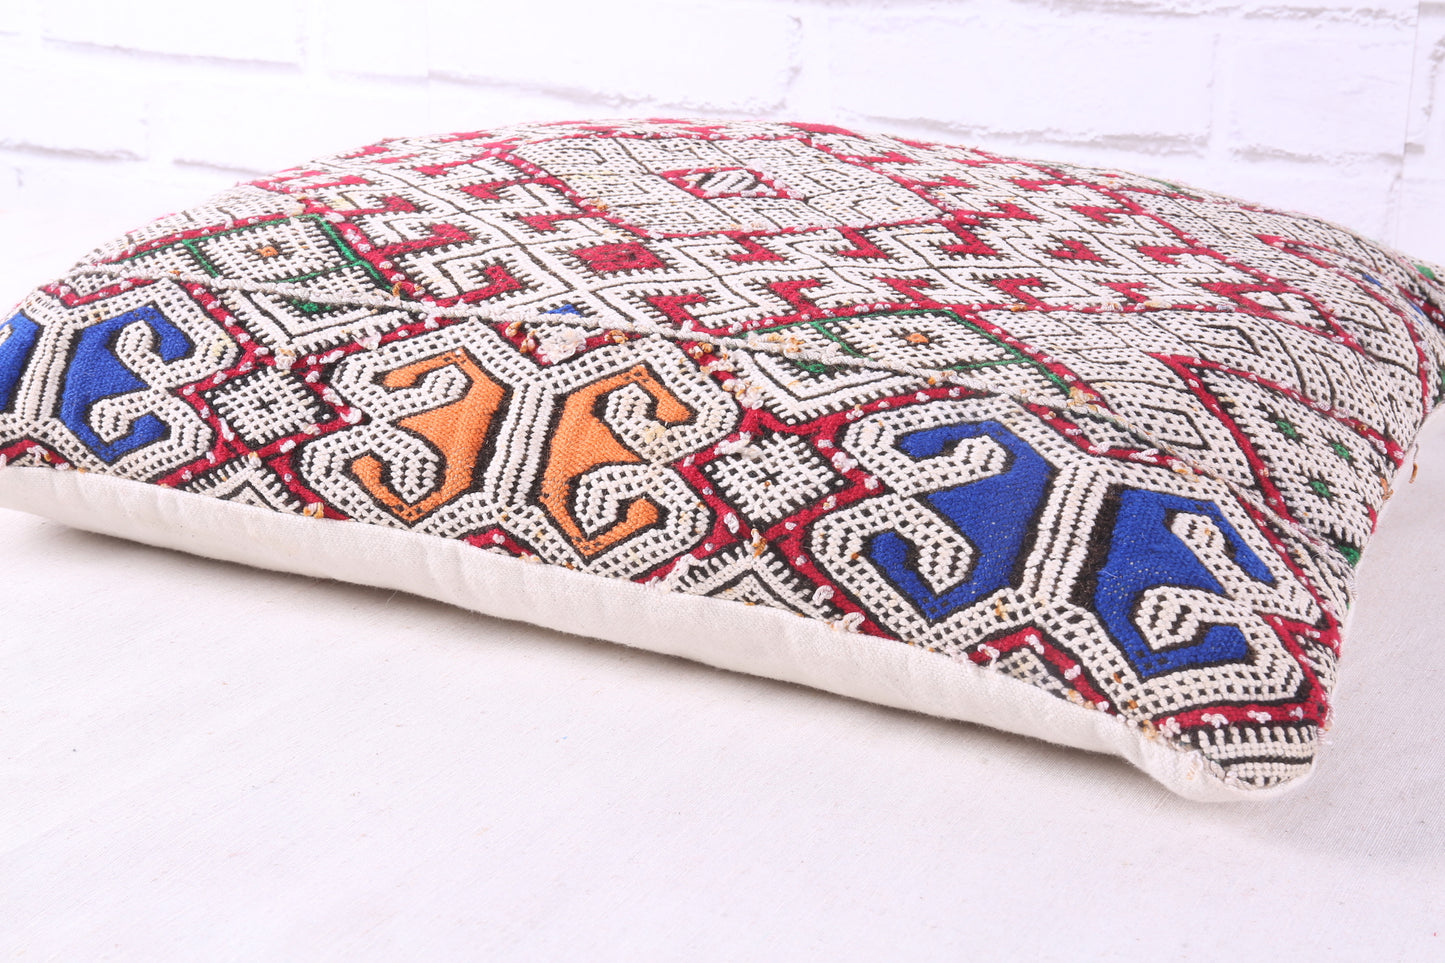 Bright Moroccan Kilim Pillow 15.3 inches X 20.8 inches